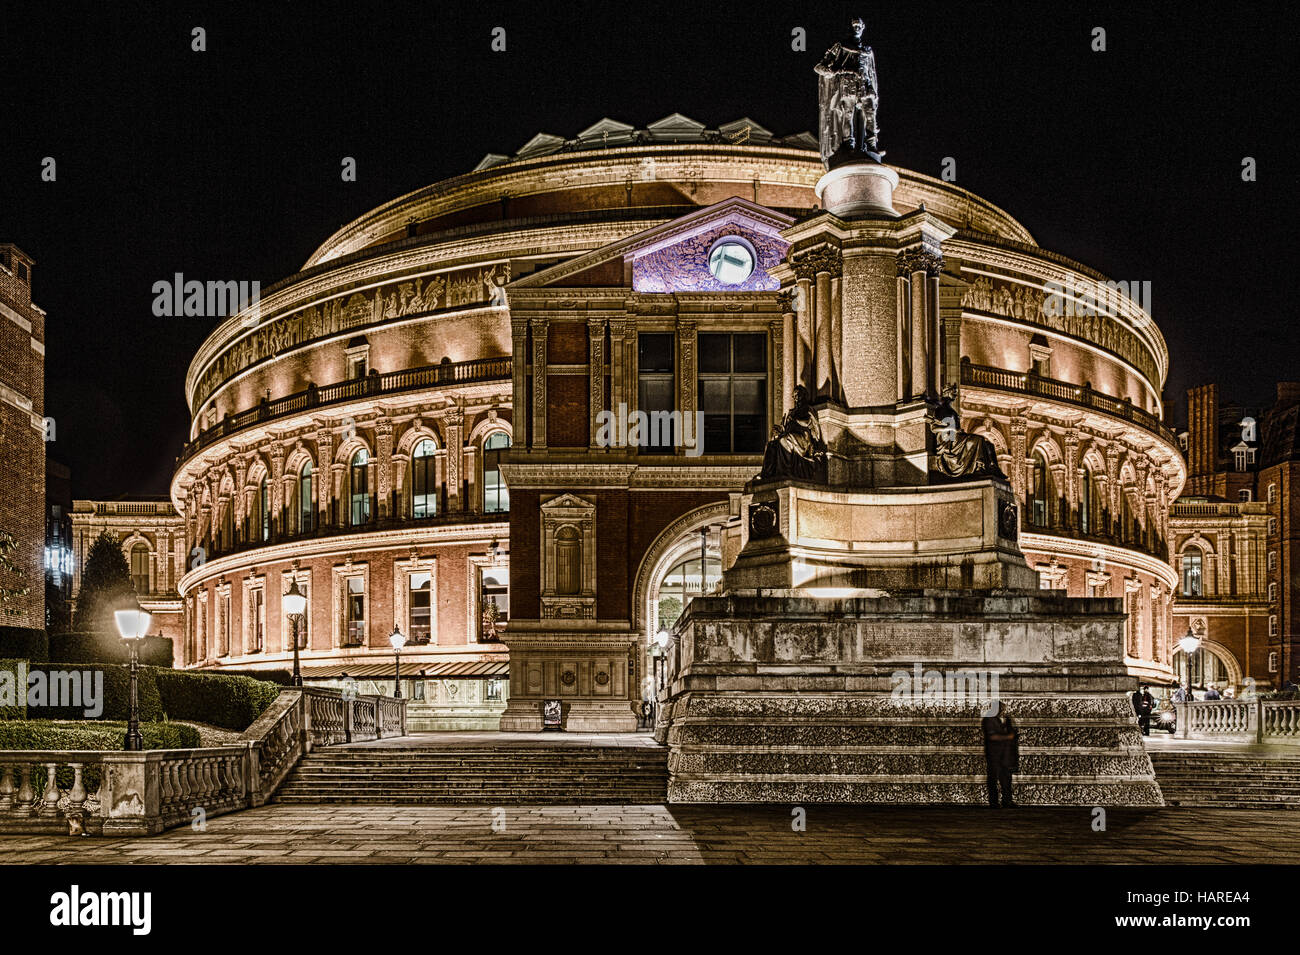 Royal Albert Hall, Londres, Angleterre, samedi, Octobre 01, 2016.Photo : David Rowland / One-Image.com Banque D'Images